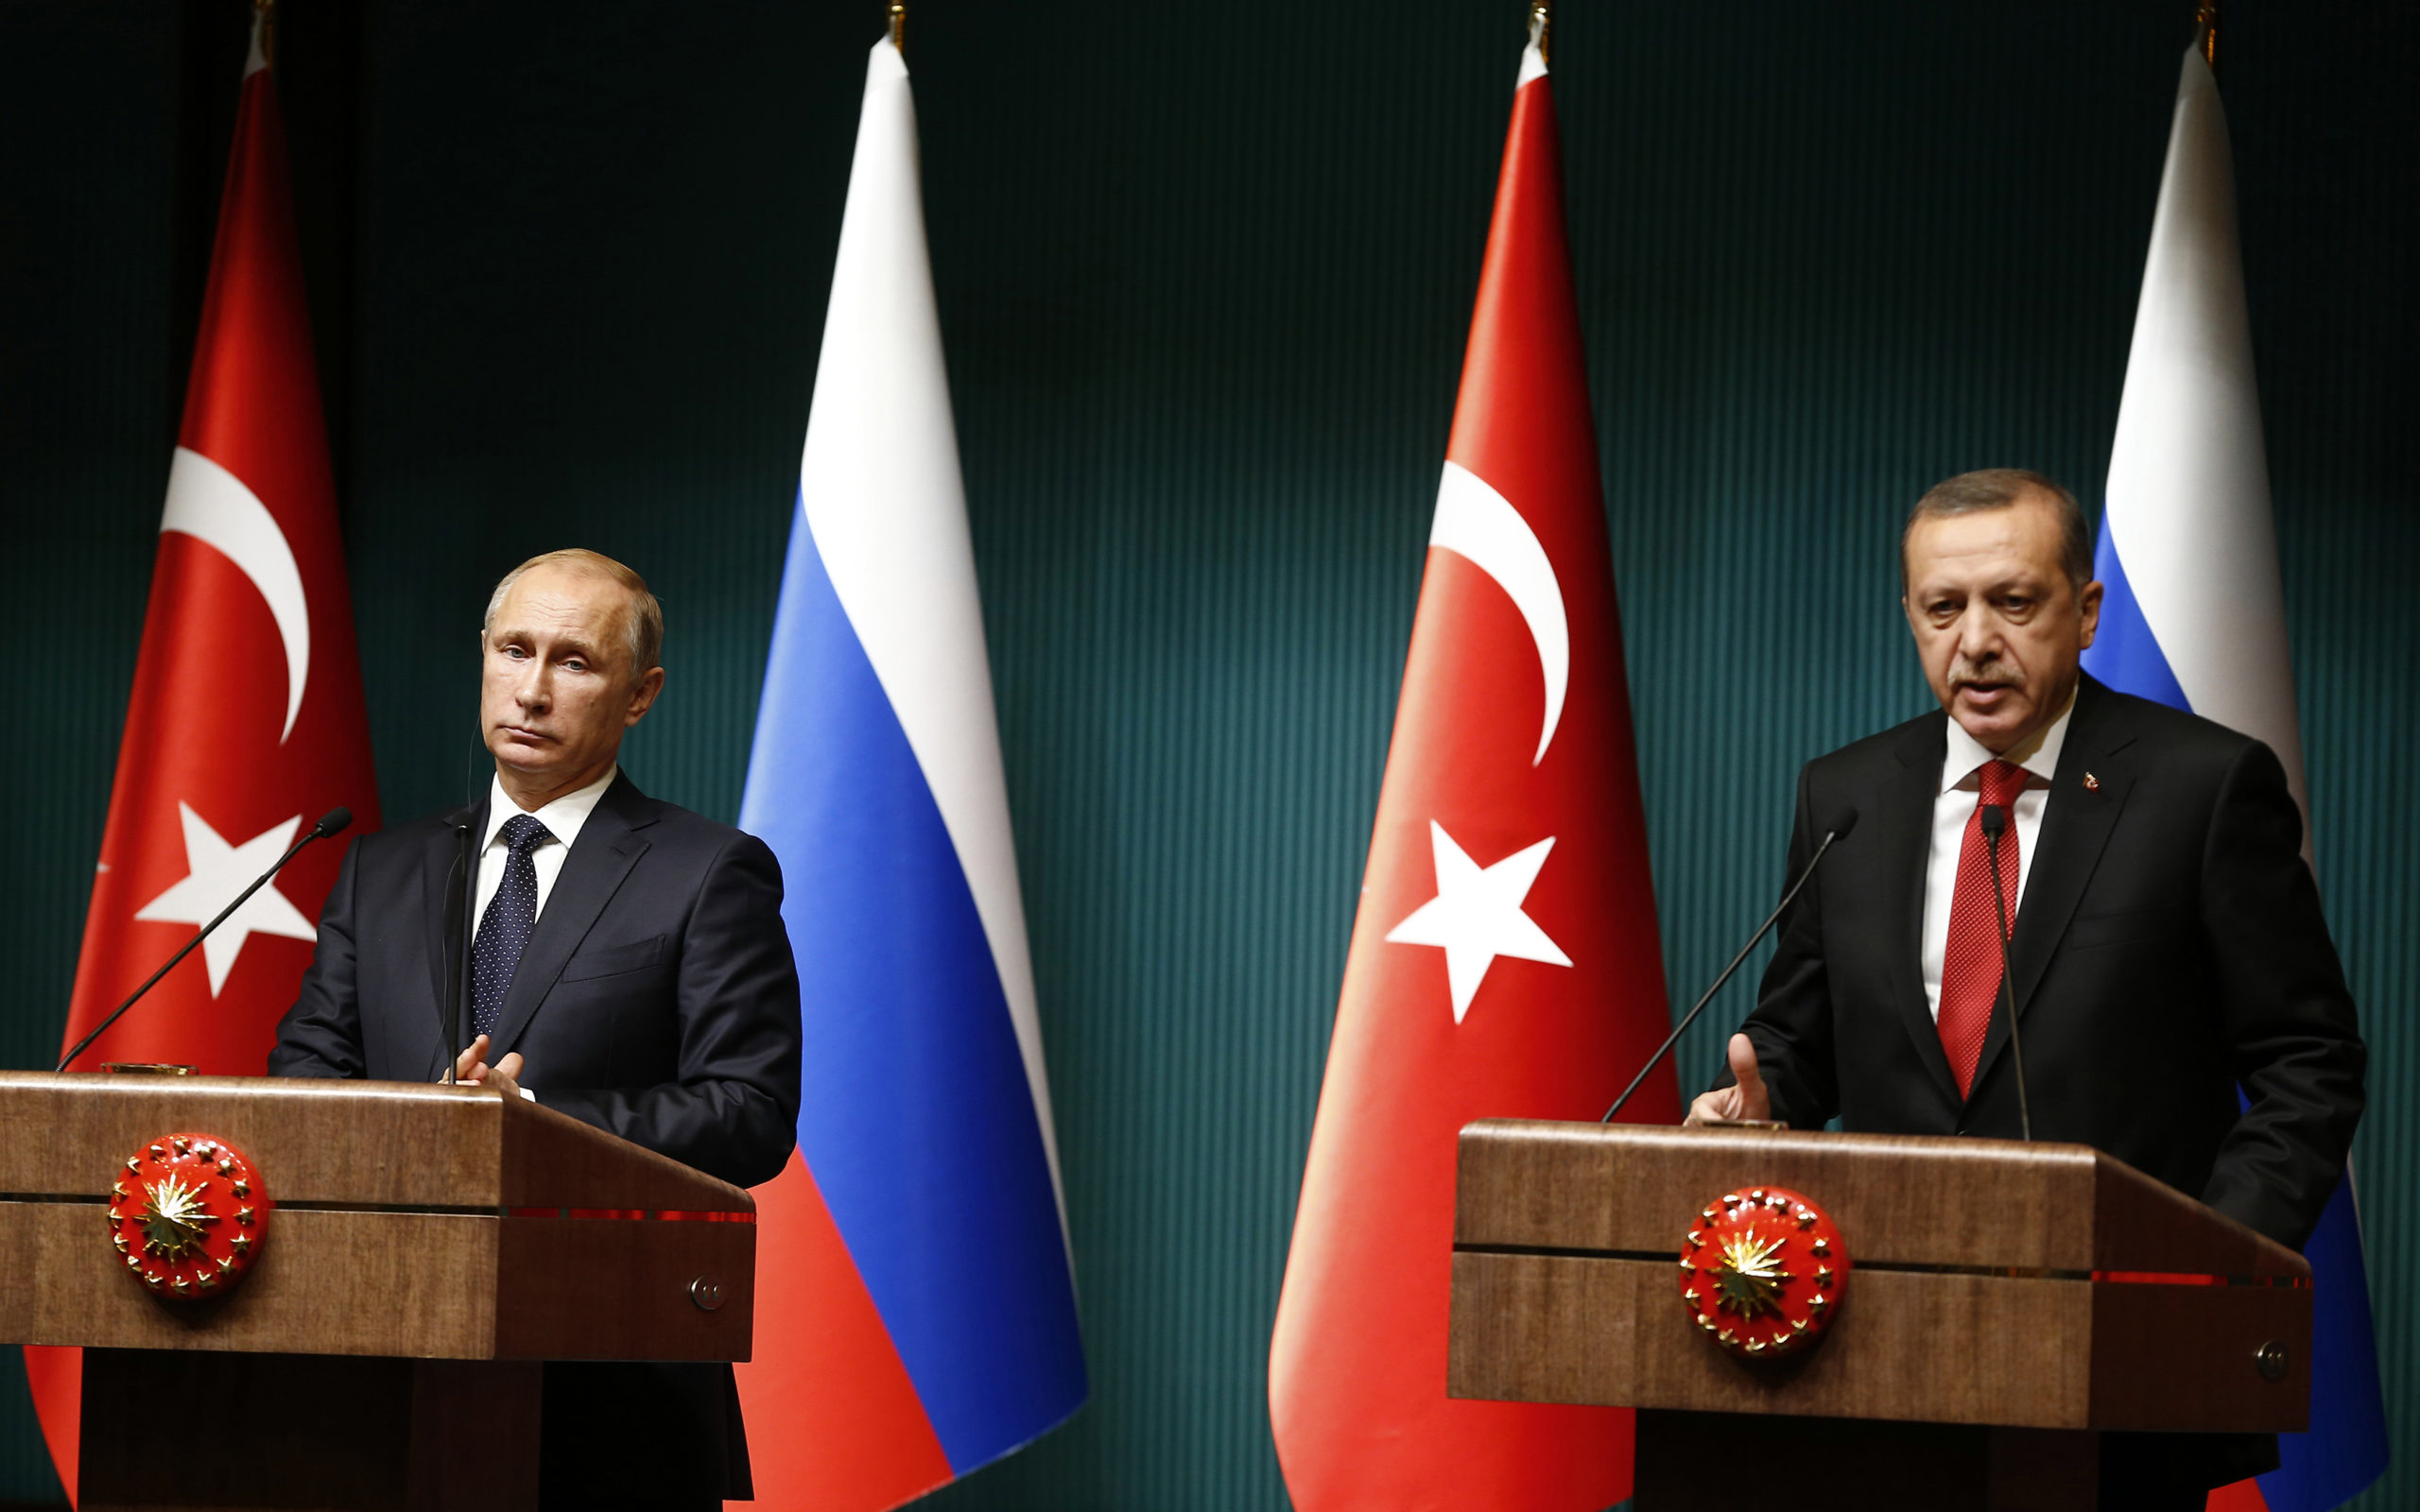 Russia's President Vladimir Putin and Turkey's President Tayyip Erdogan attend a news conference at the Presidential Palace in Ankara December 1, 2014. REUTERS/Umit Bektas (TURKEY - Tags: POLITICS) - RTR4GAUT